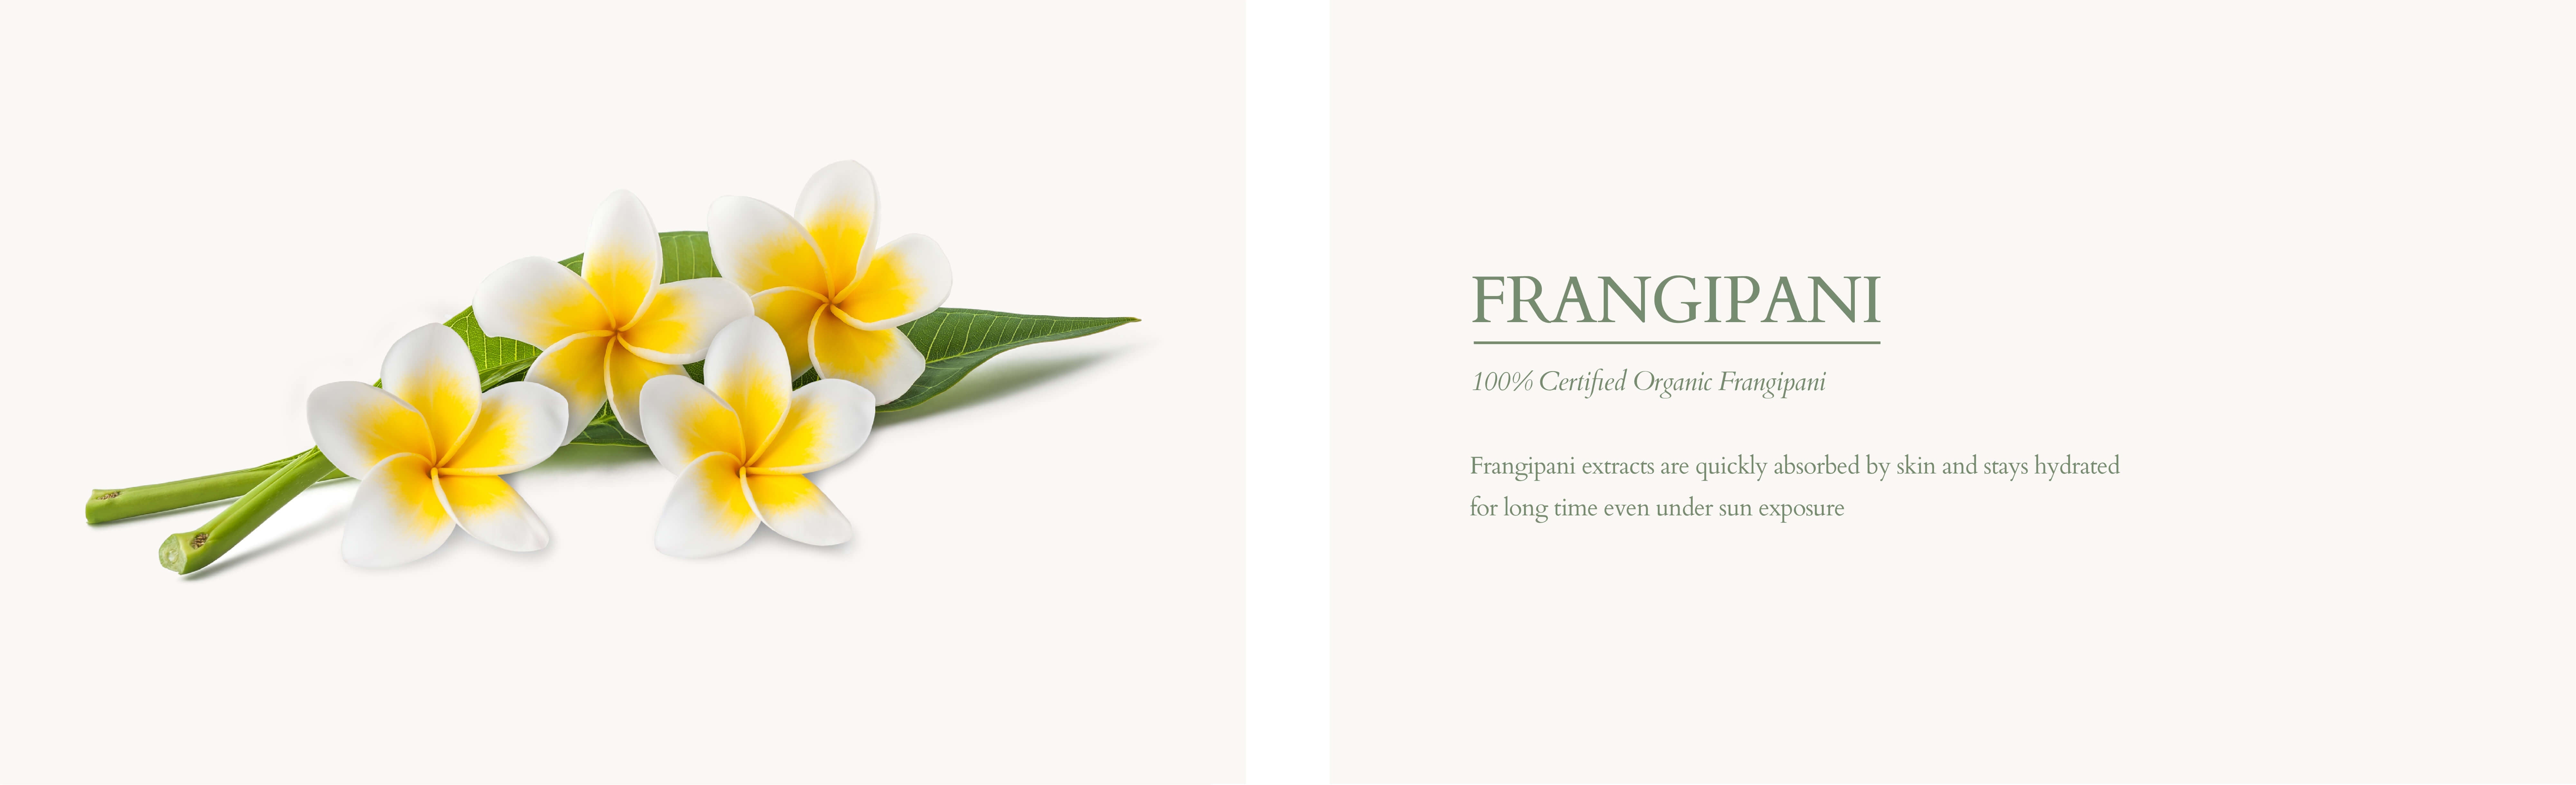 Organic frangipani for skin 5cdf8ef0 7126 48b7 93cd 5151f1ed8a78